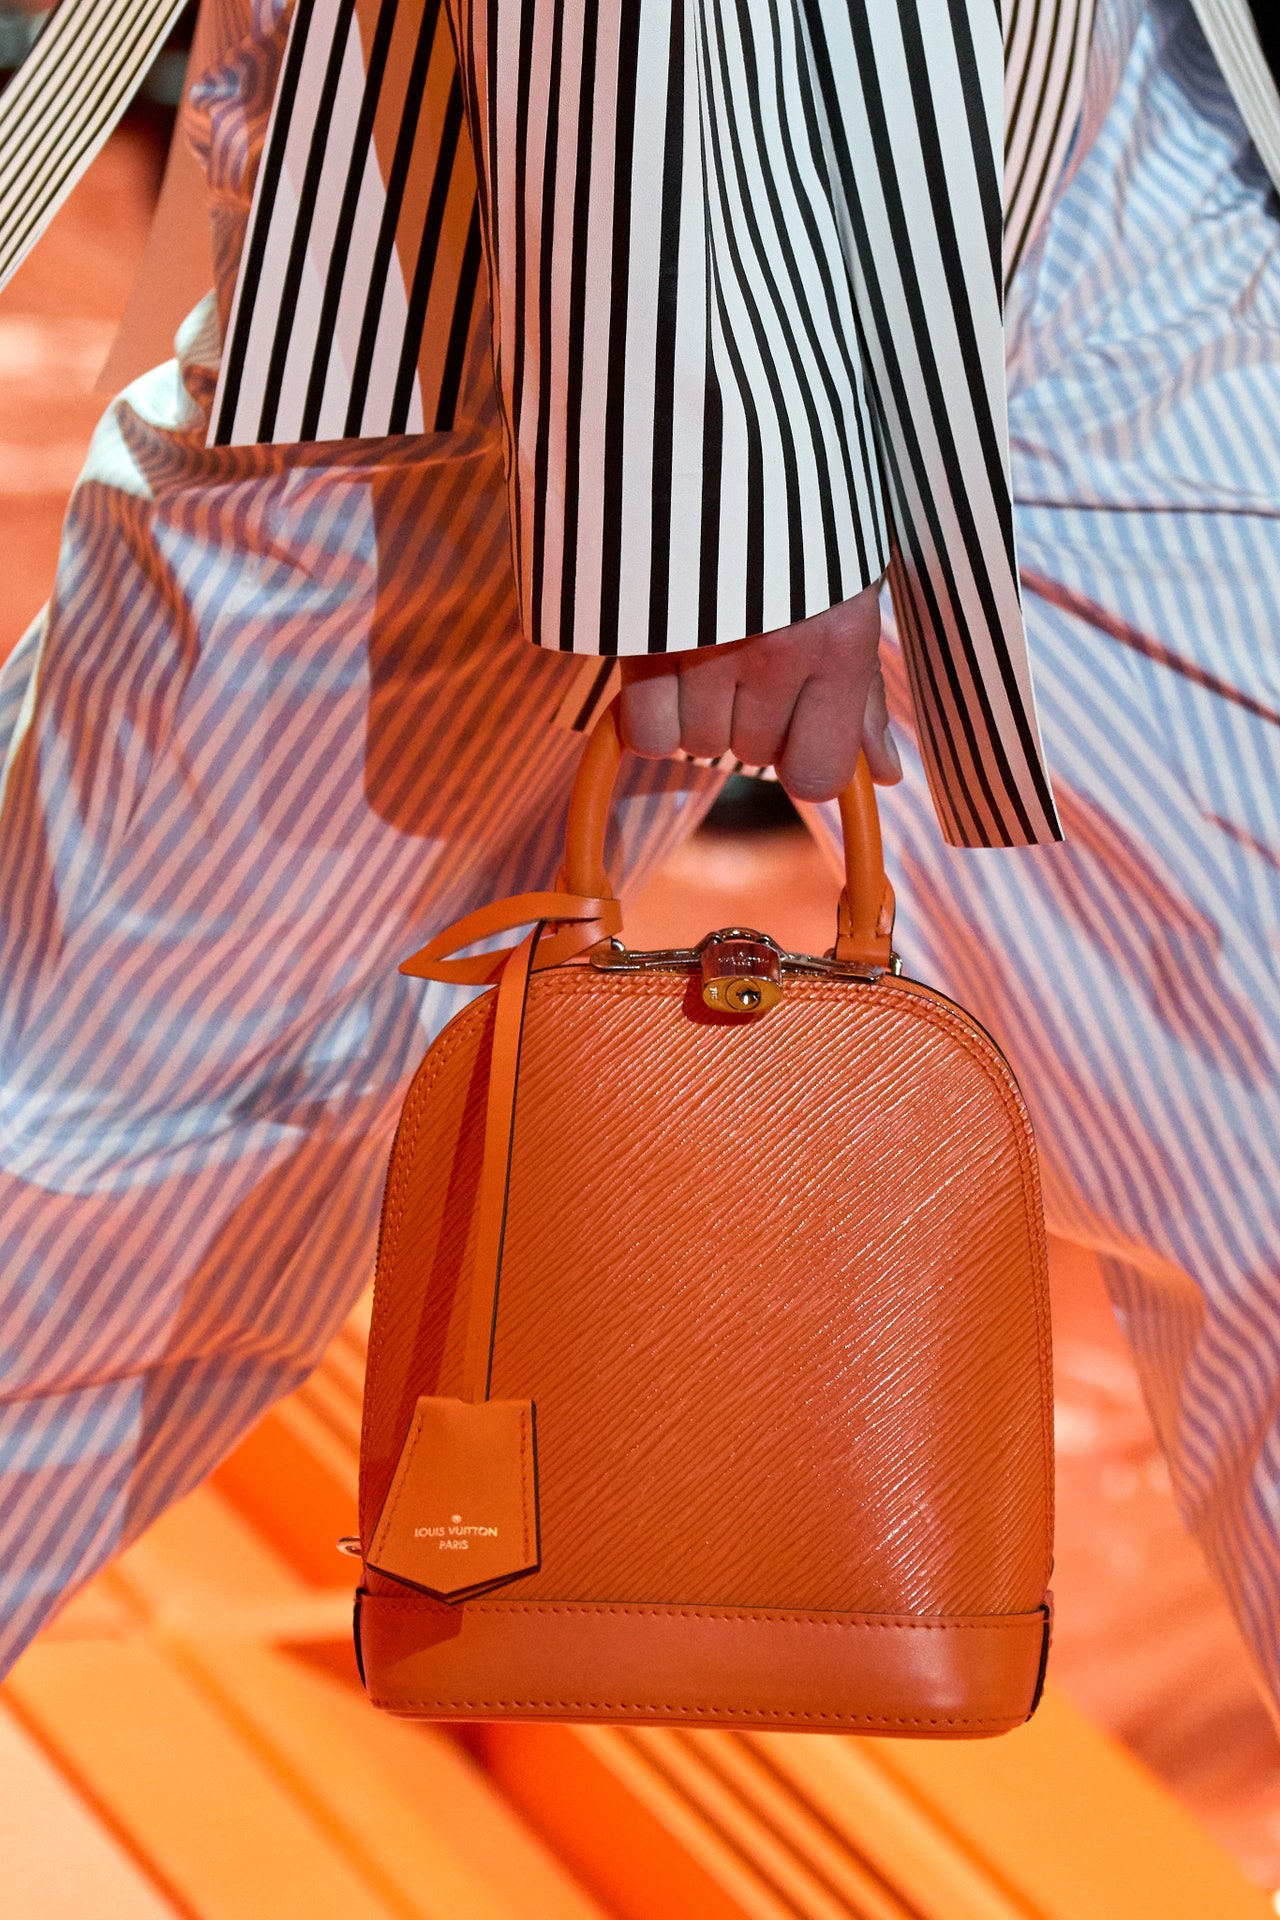 Louis Vuitton's GO-14 bag is the brand's next big hit